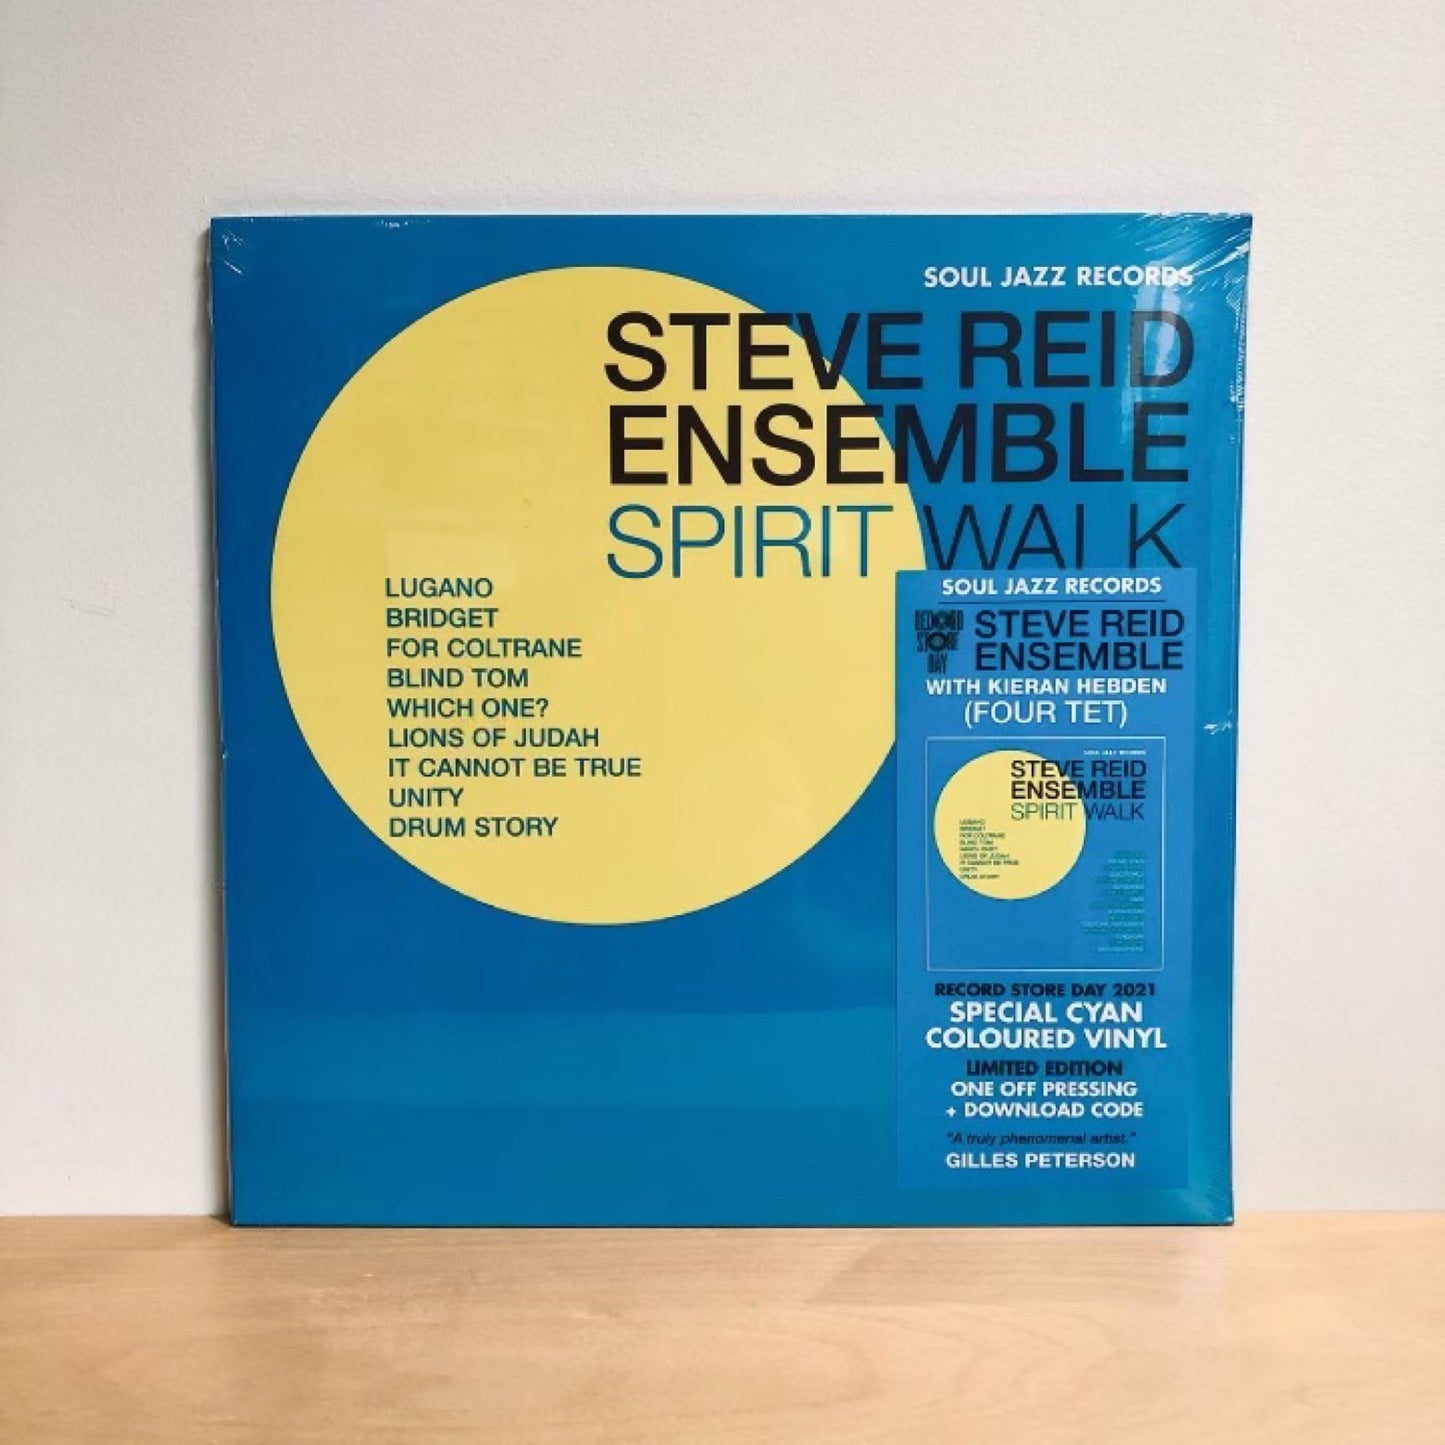 RSD2021 - Steve Reid Ensemble with Kieran Hebden (Four Tet) Spirit Walk. 2LP [Black Vinyl - Not Blue As Sticker Suggests]